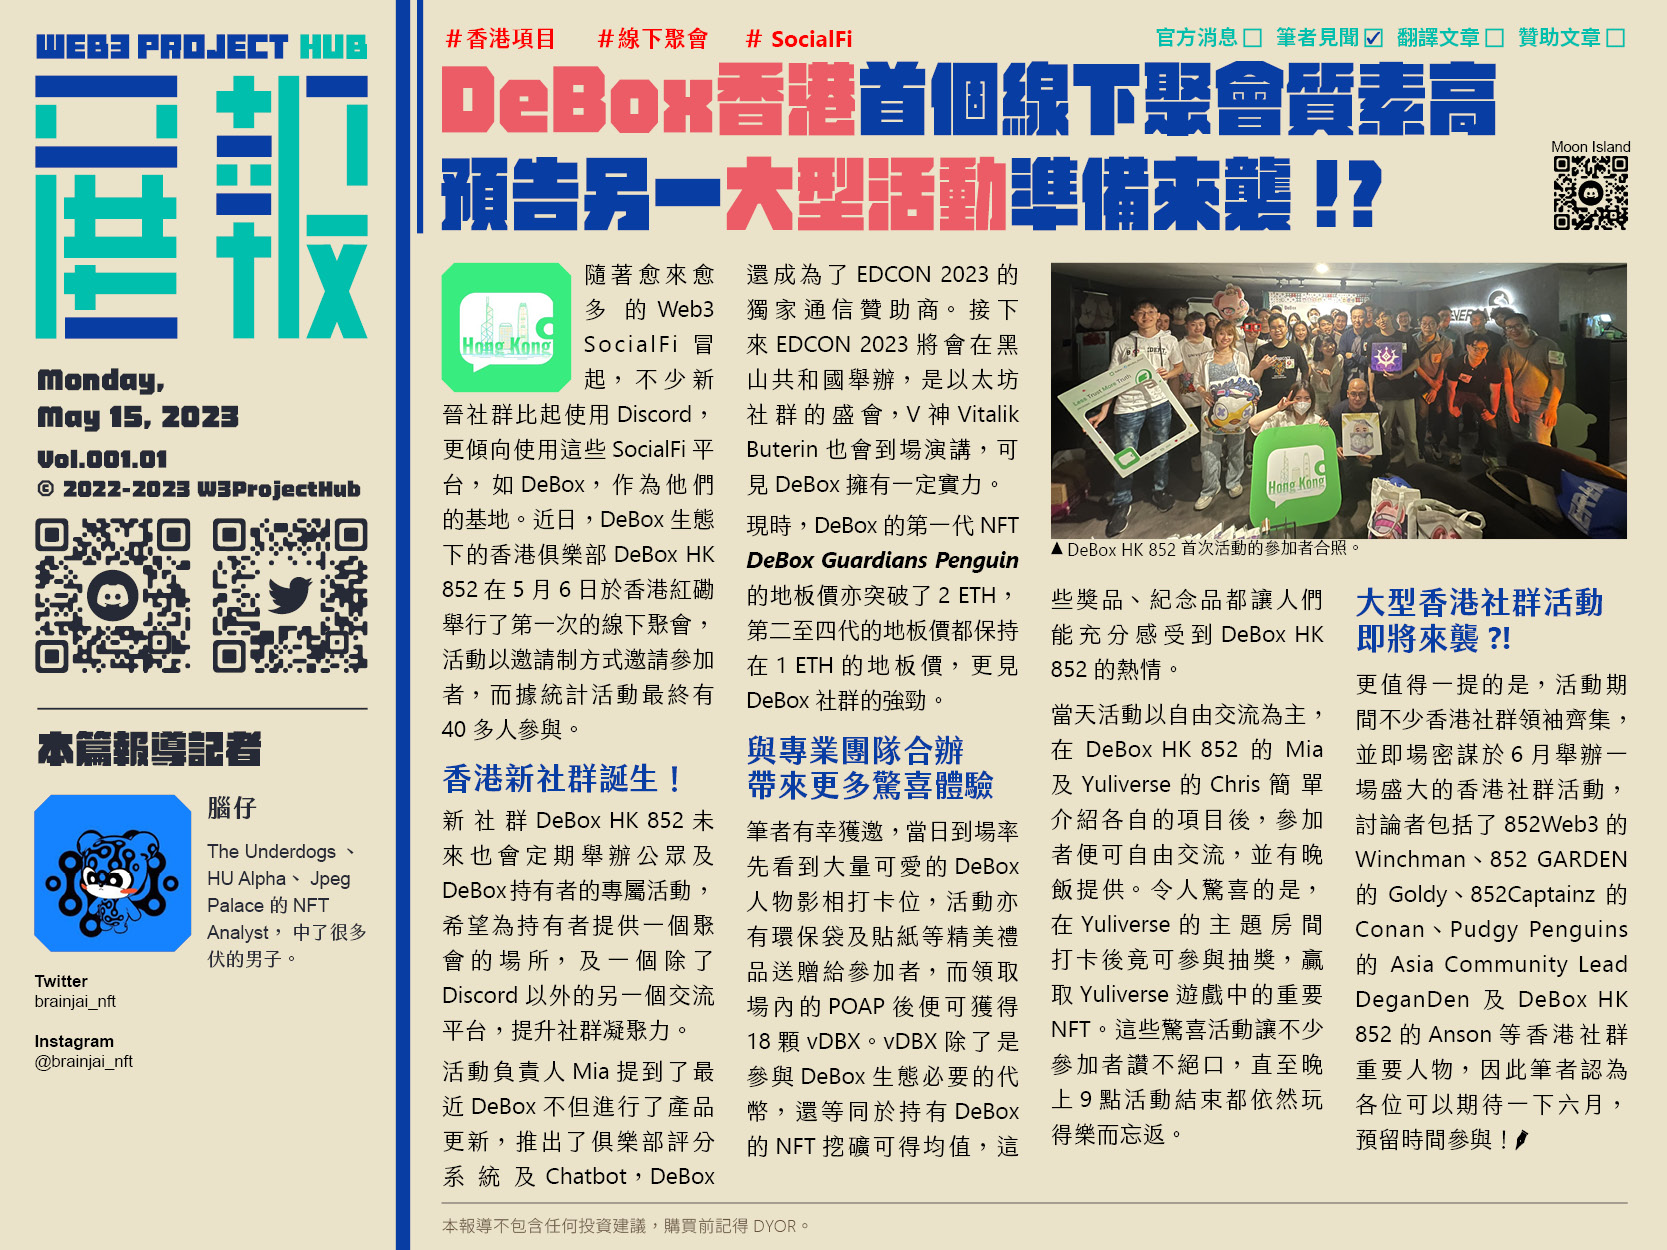 DeBox香港首個線下聚會質素高，預告另一大型活動準備來襲!?